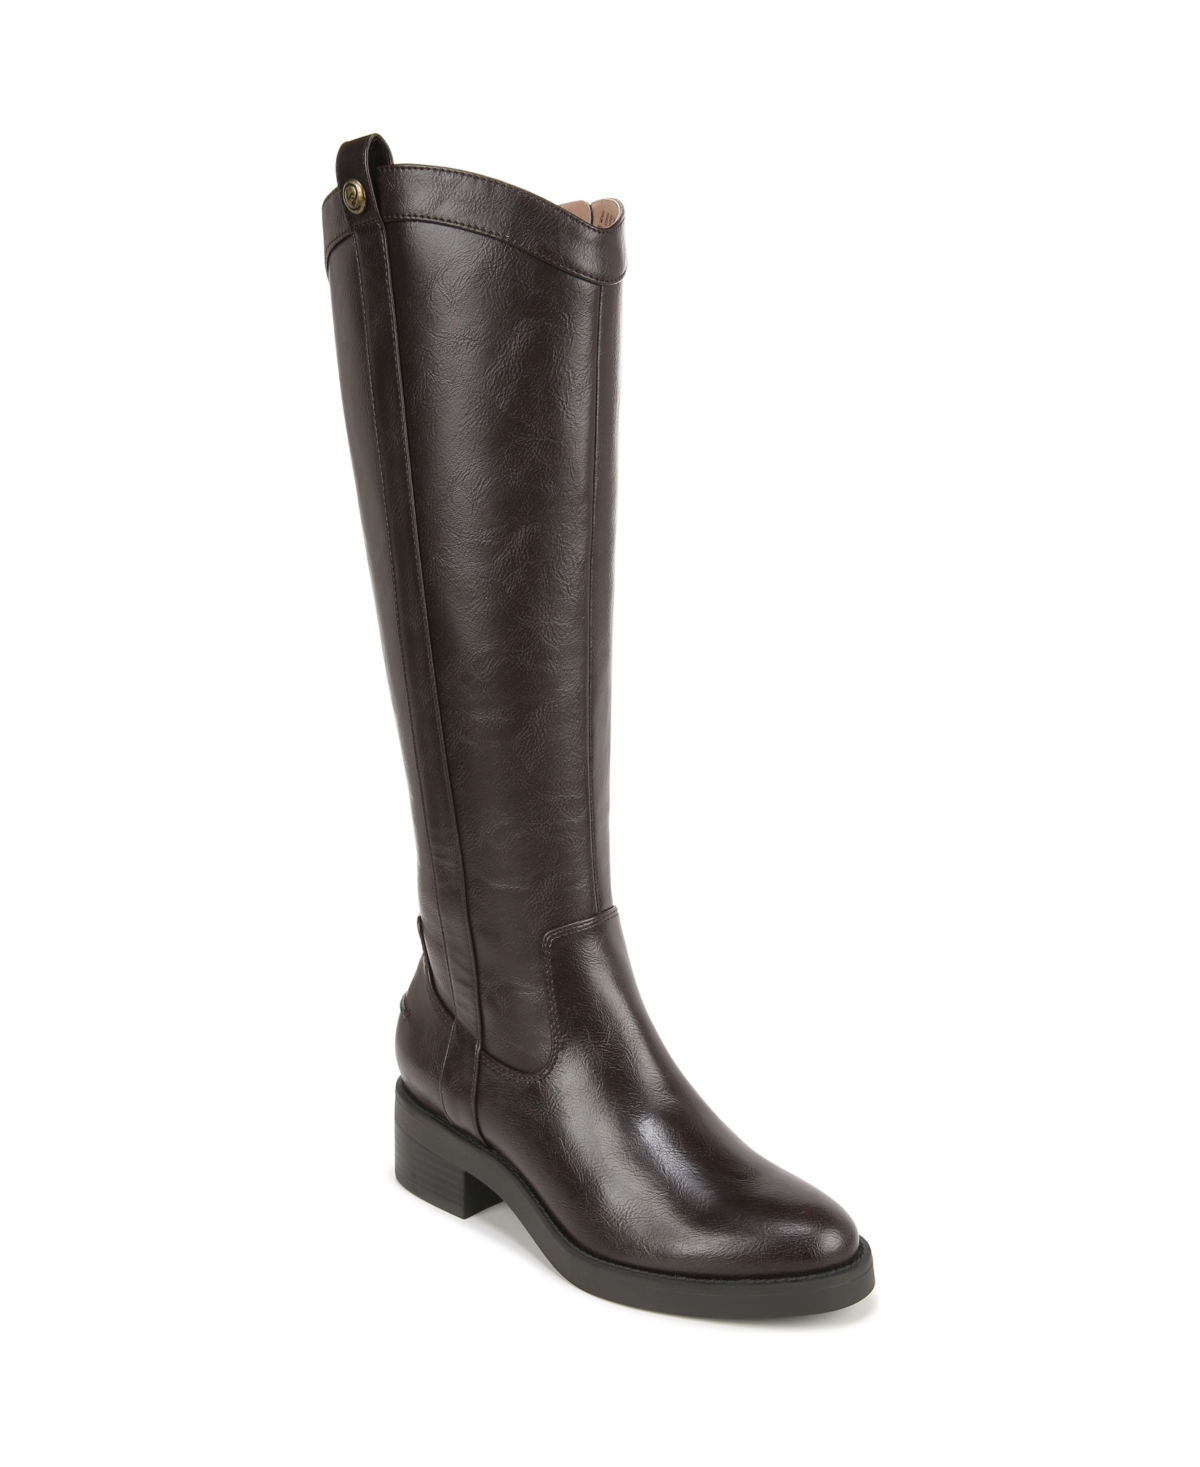 Bridgett Knee High Boots - Chocolate Faux Leather